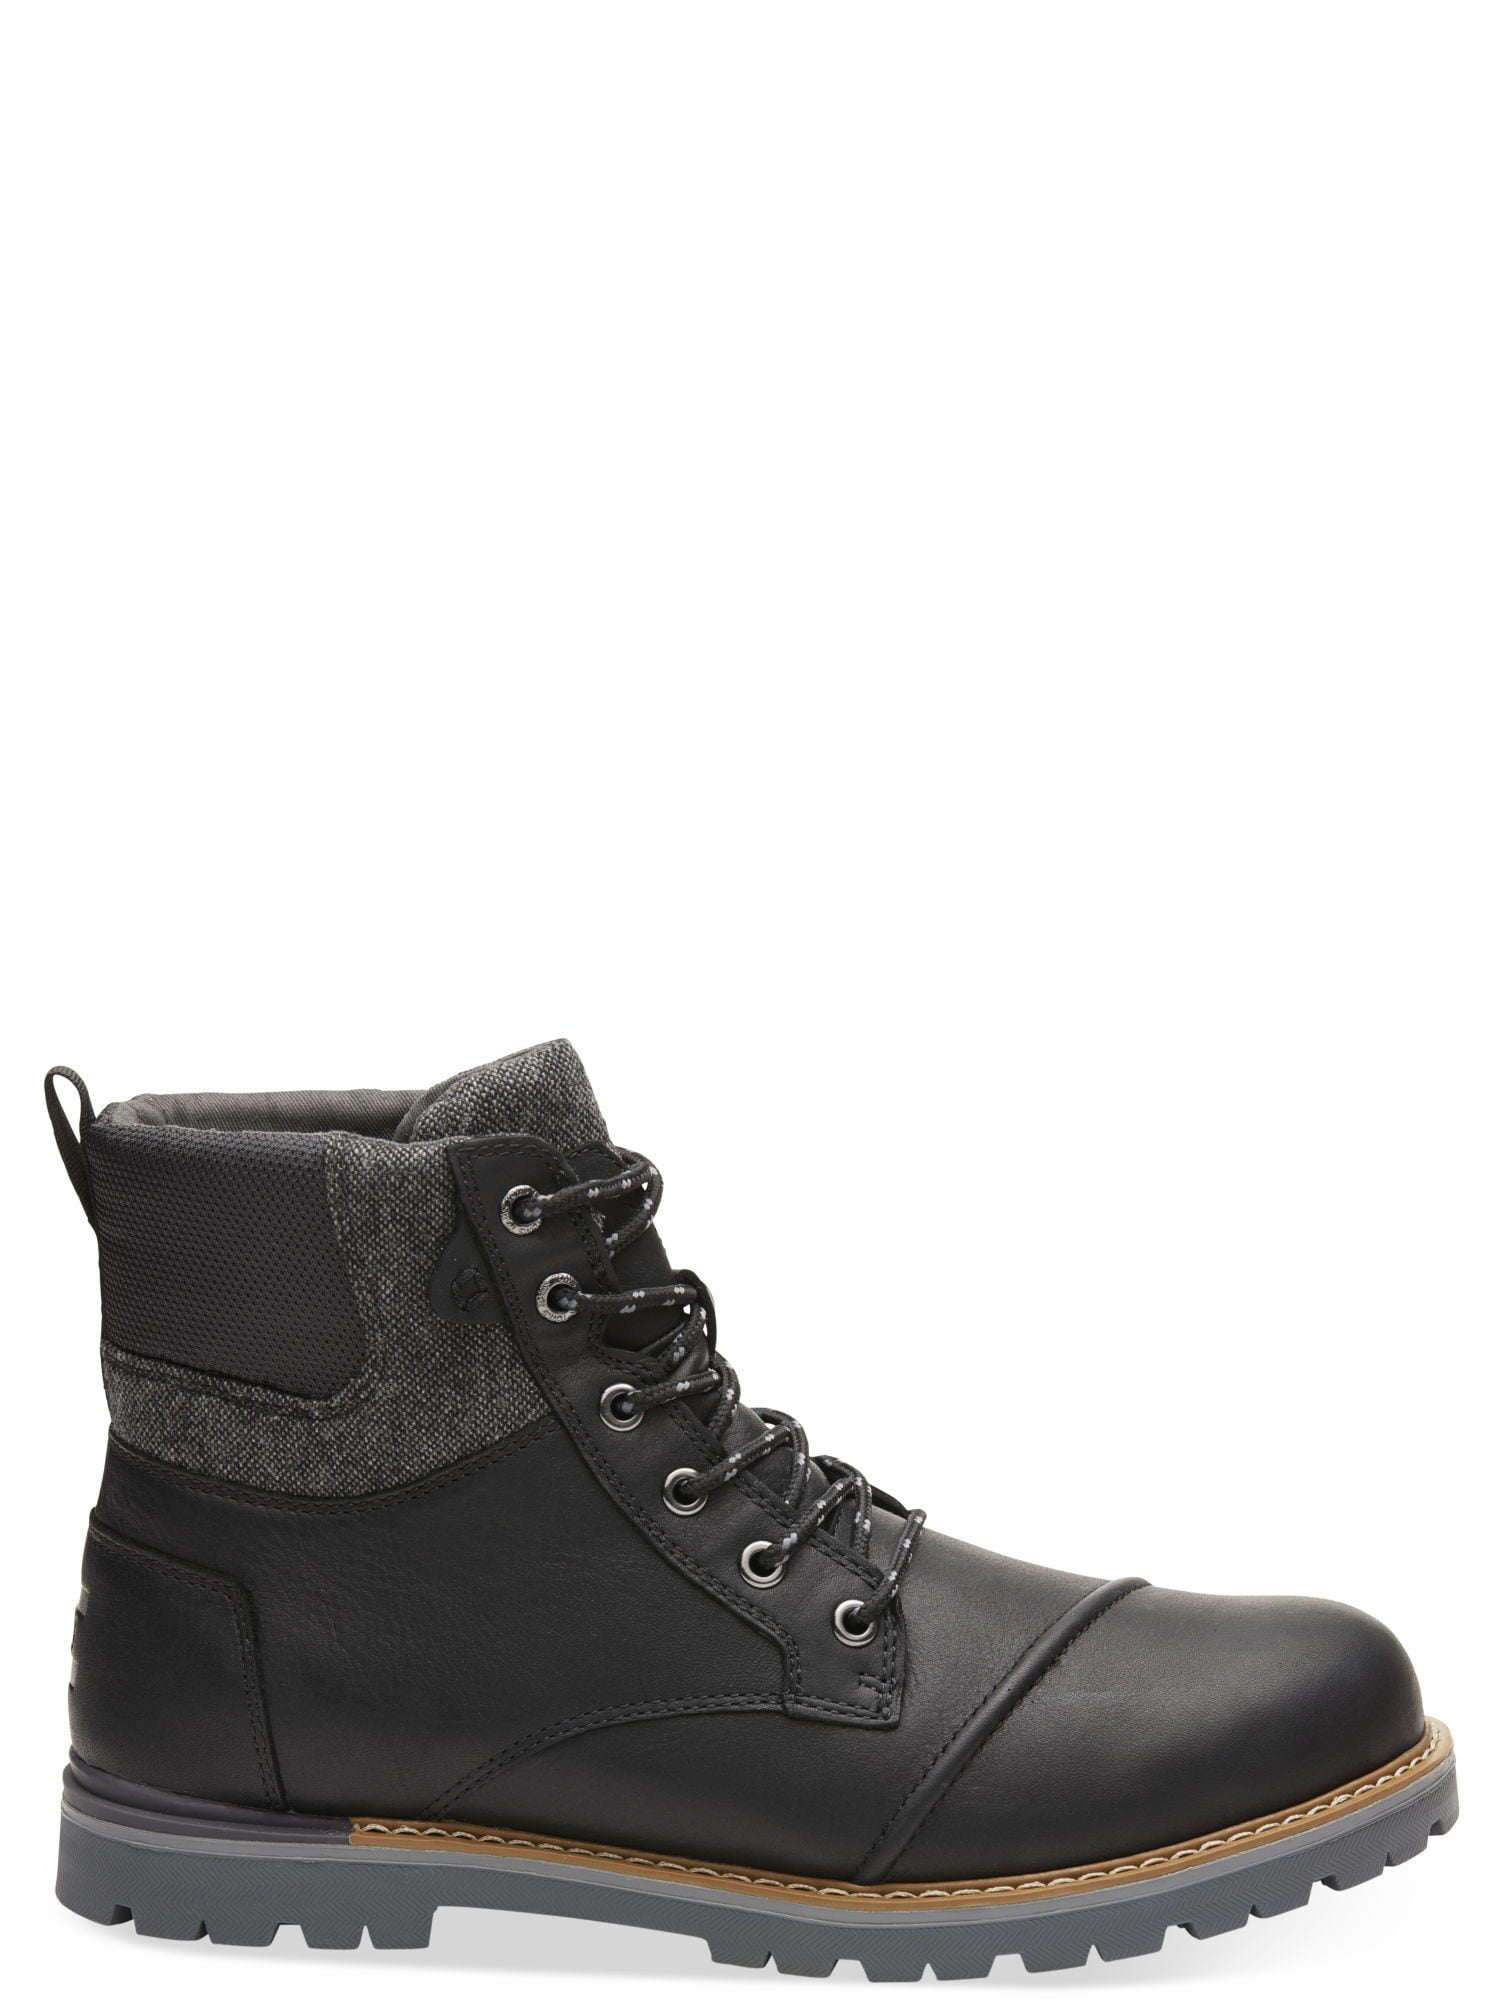 toms ashland boots black